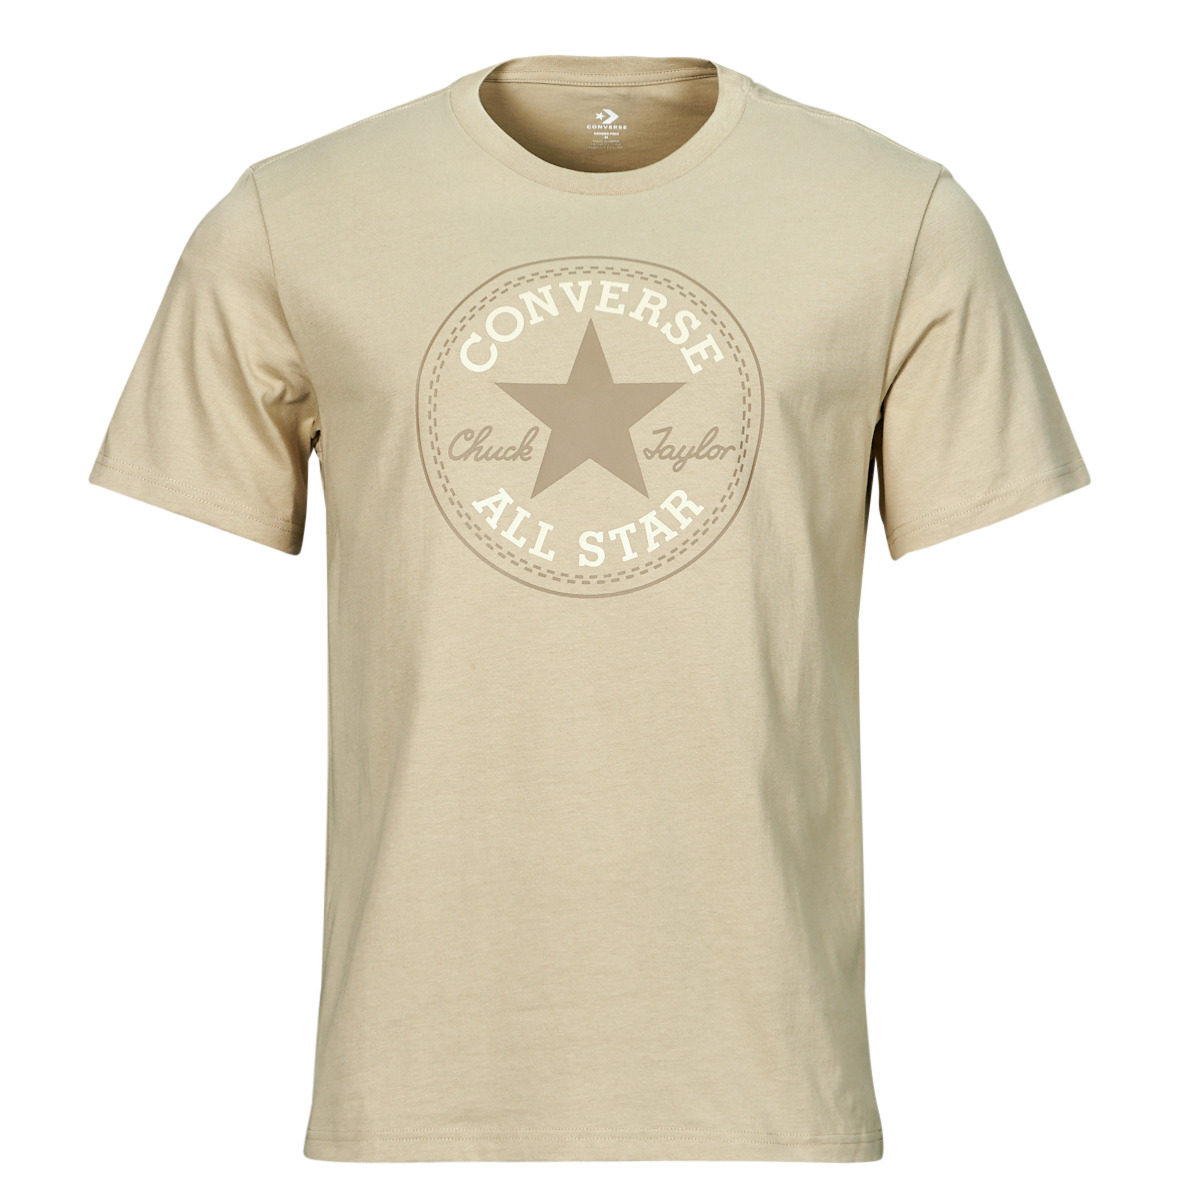 Kleidung T-Shirts Converse CHUCK PATCH TEE BEACH STONE / WHITE Beige